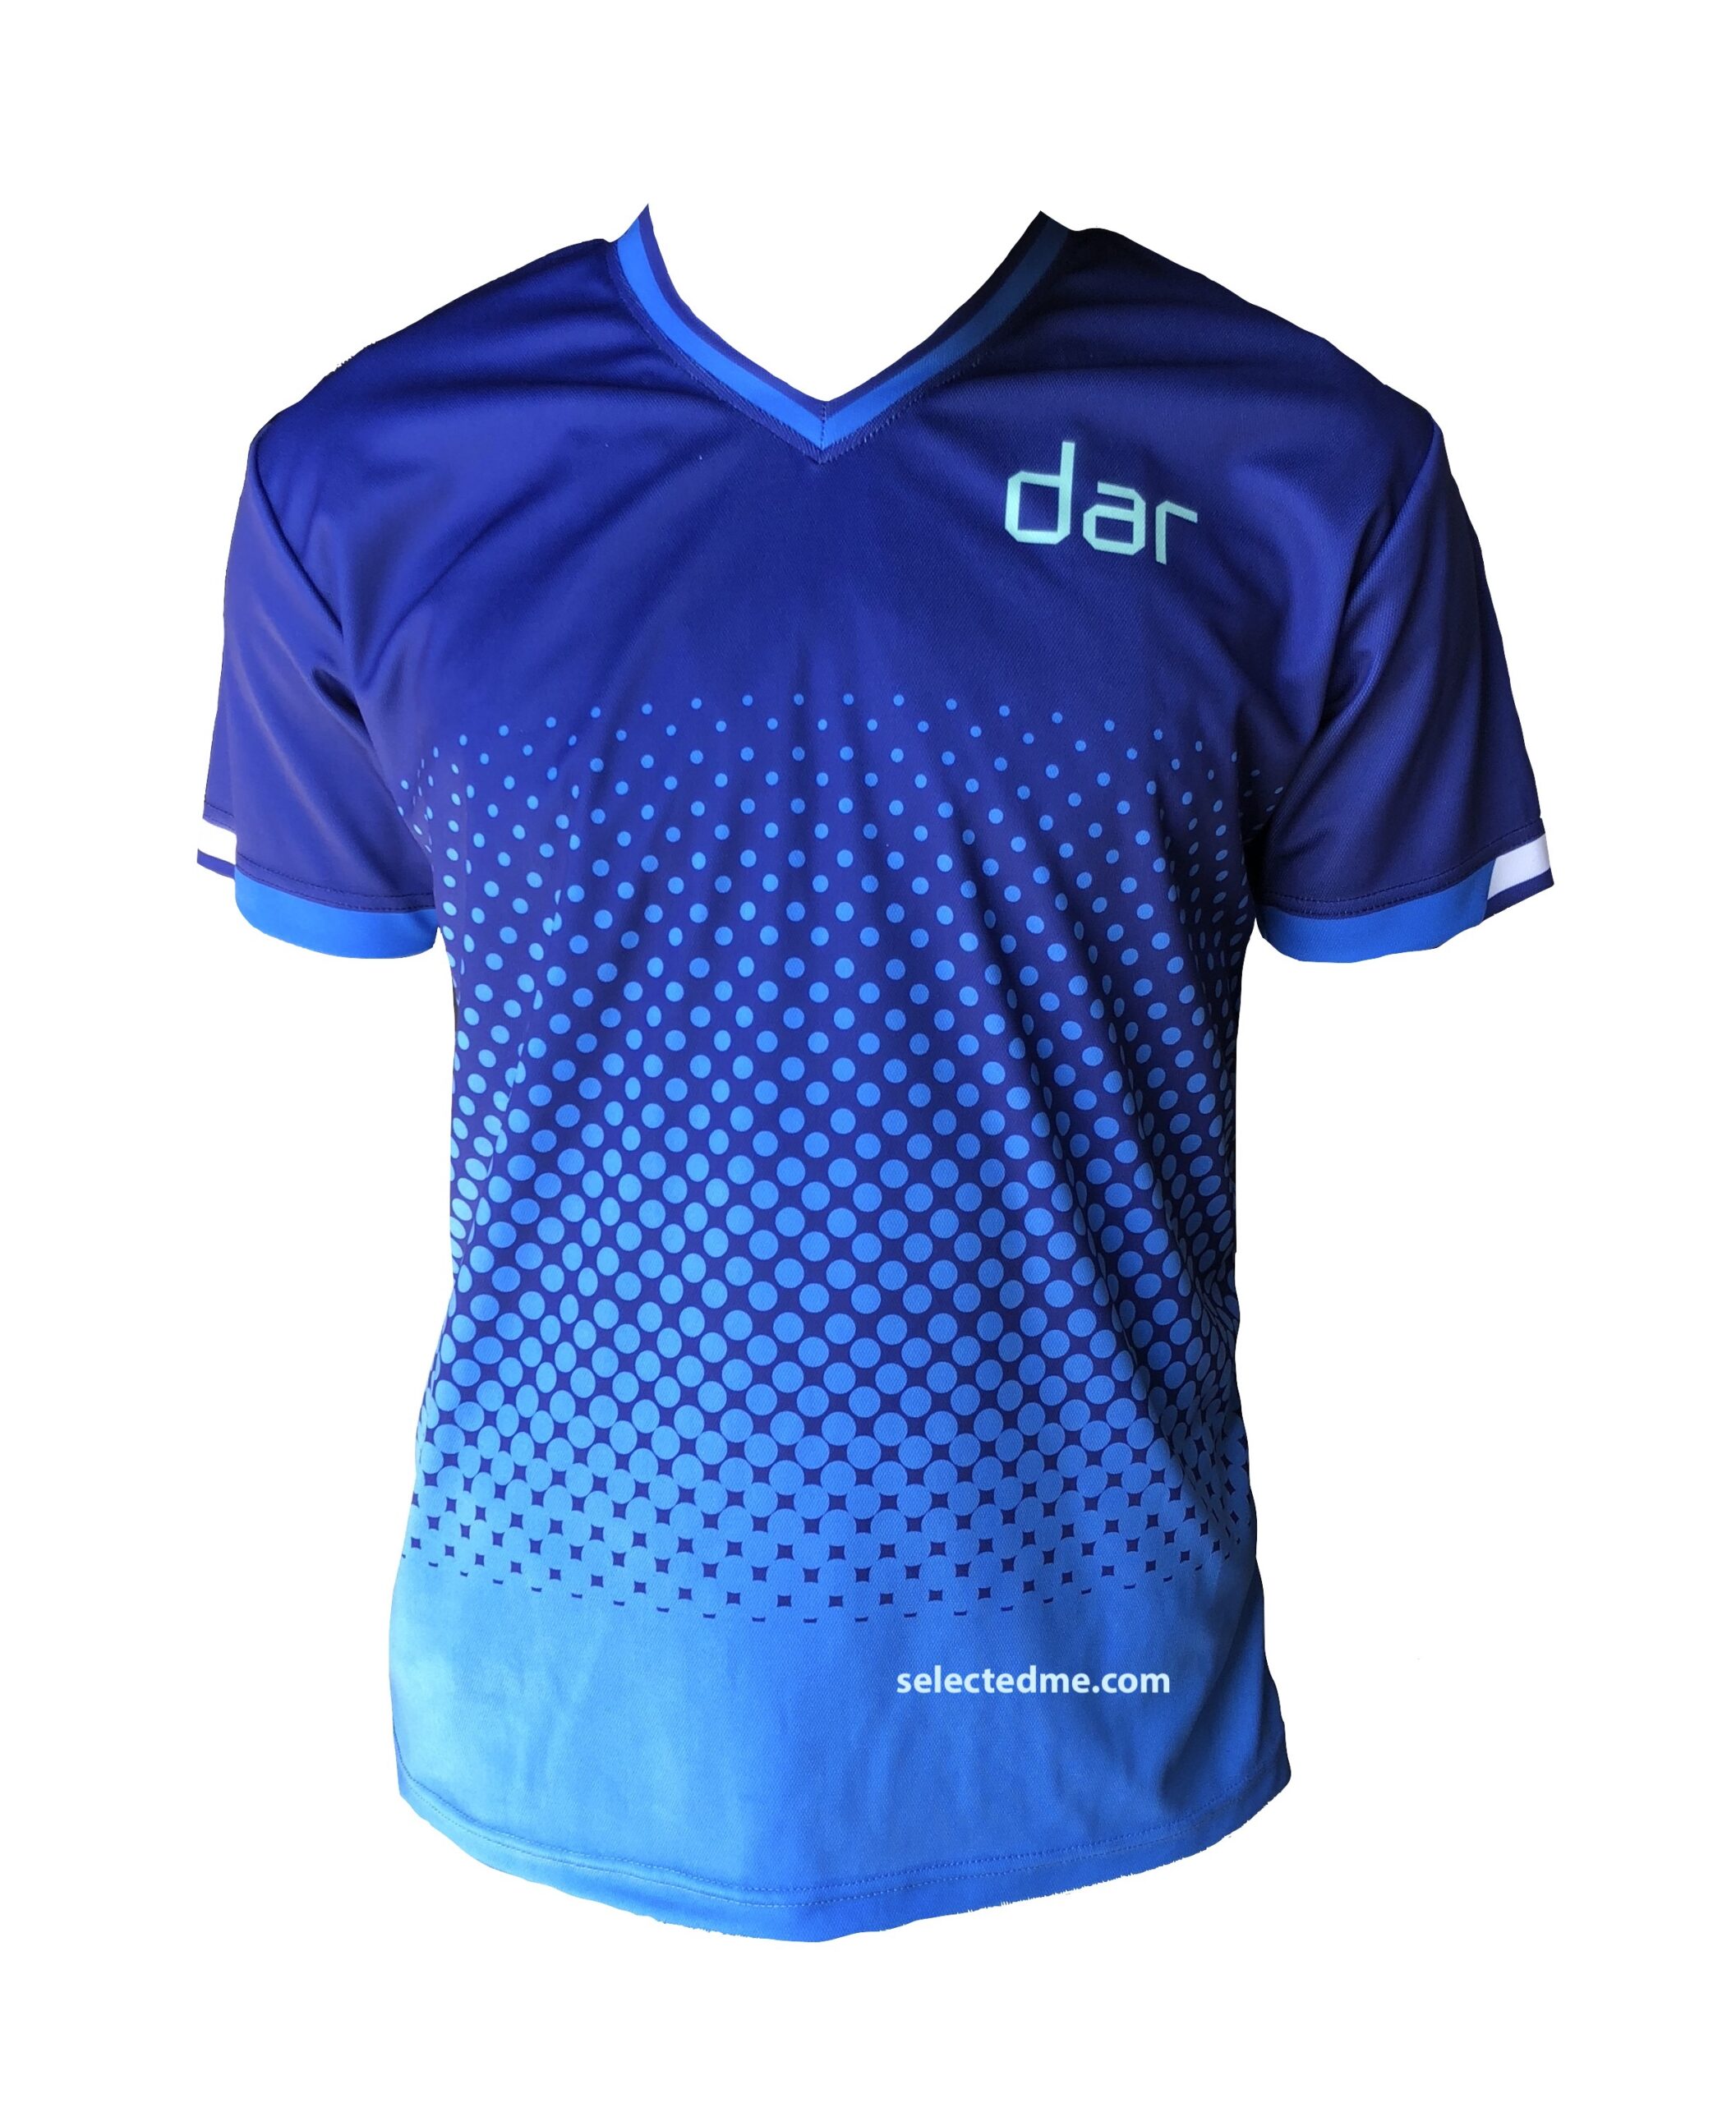 Team Uniforms - Digital Printed Team Jerseys, Sublimated Jerseys